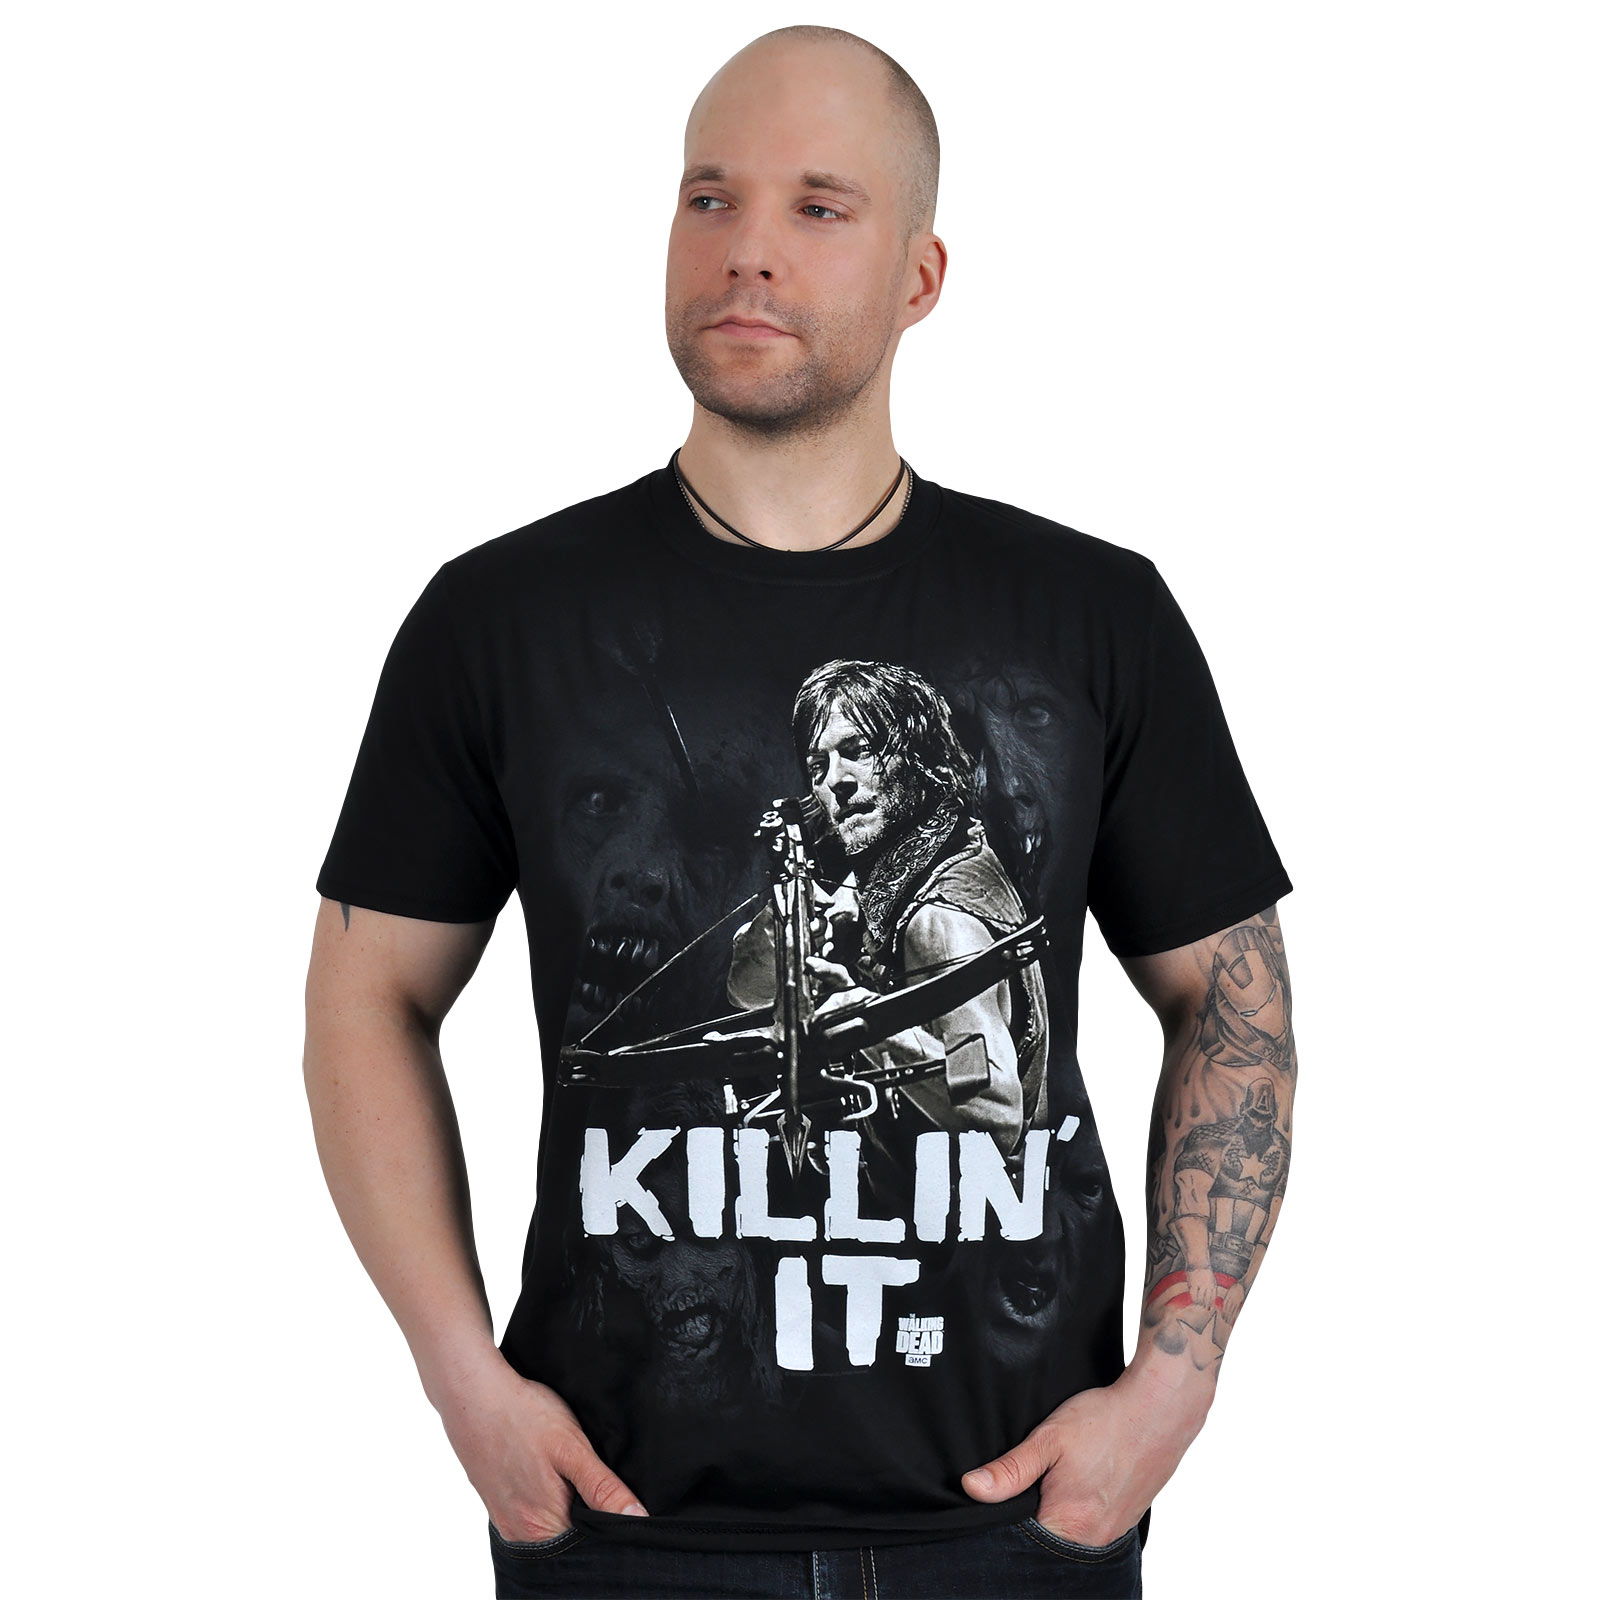 Walking Dead - Killin'It T-Shirt